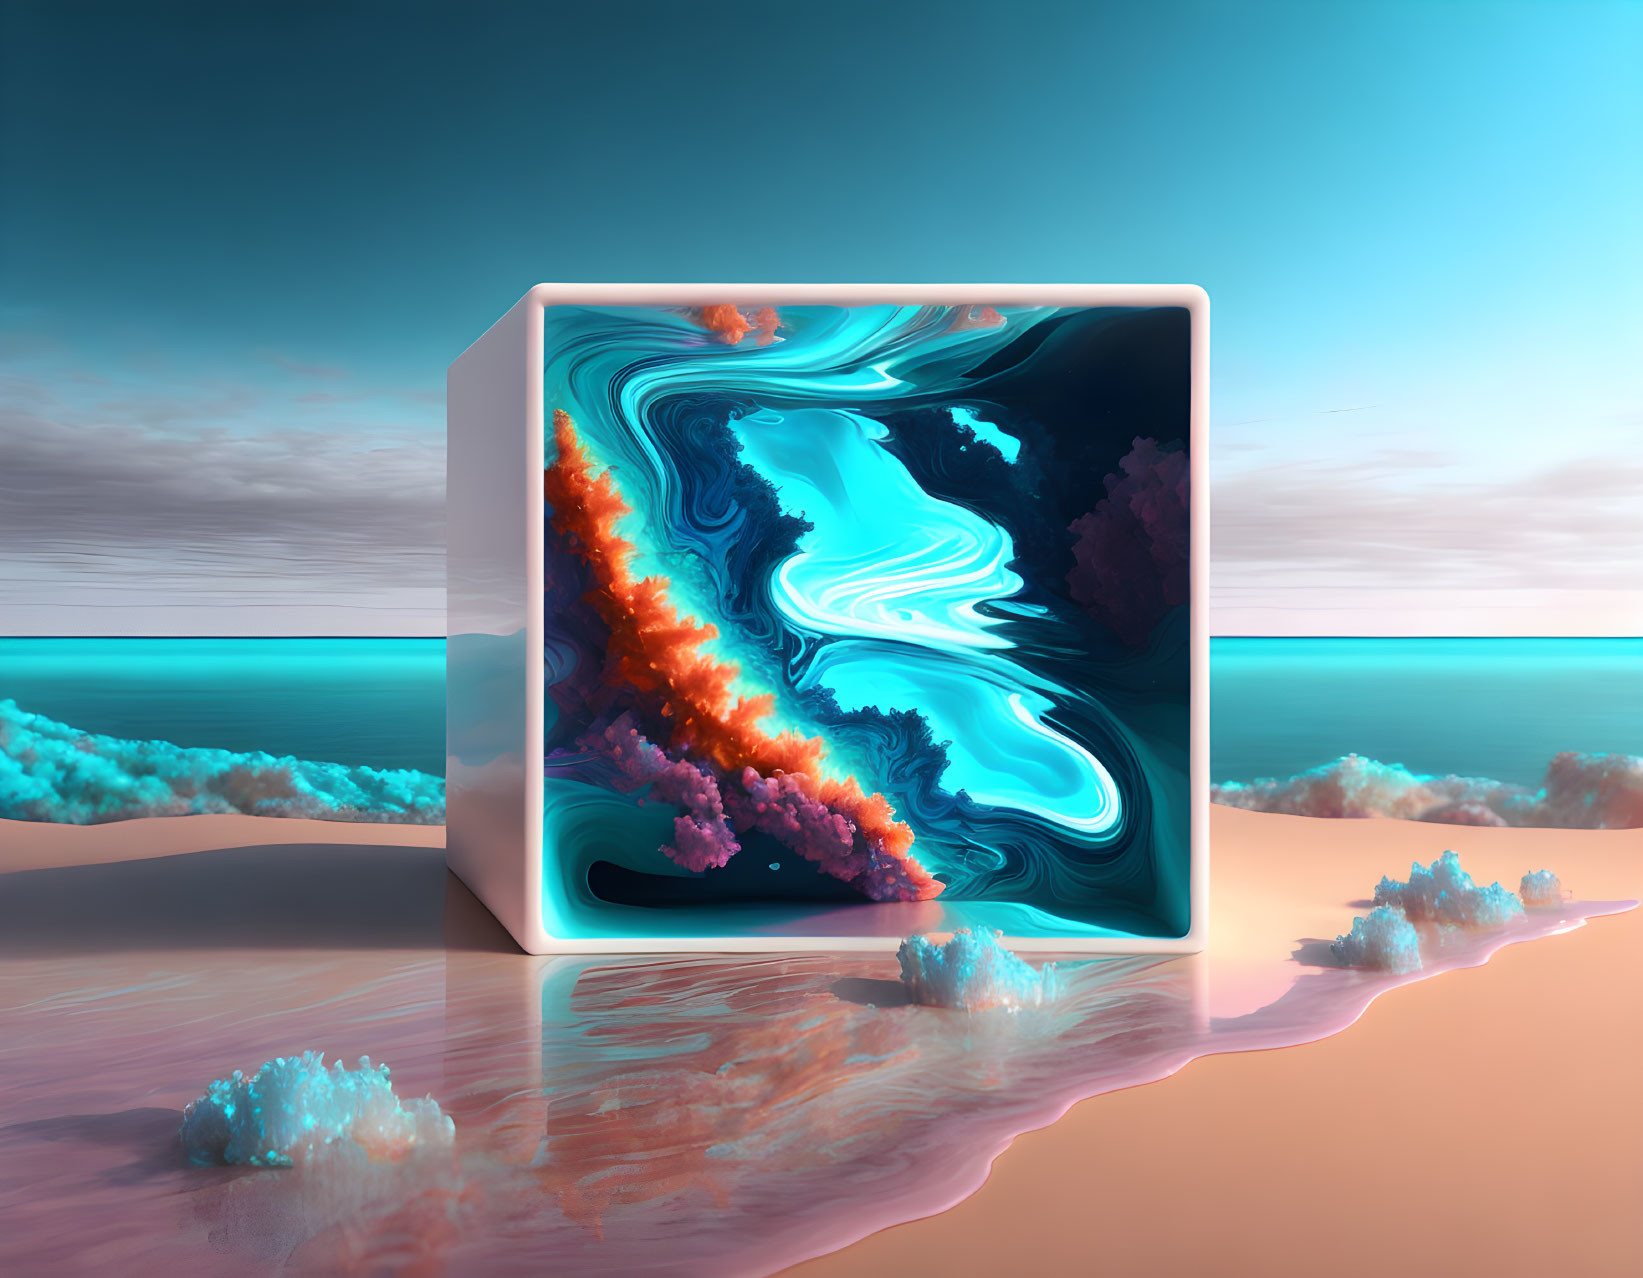 acrylic cube